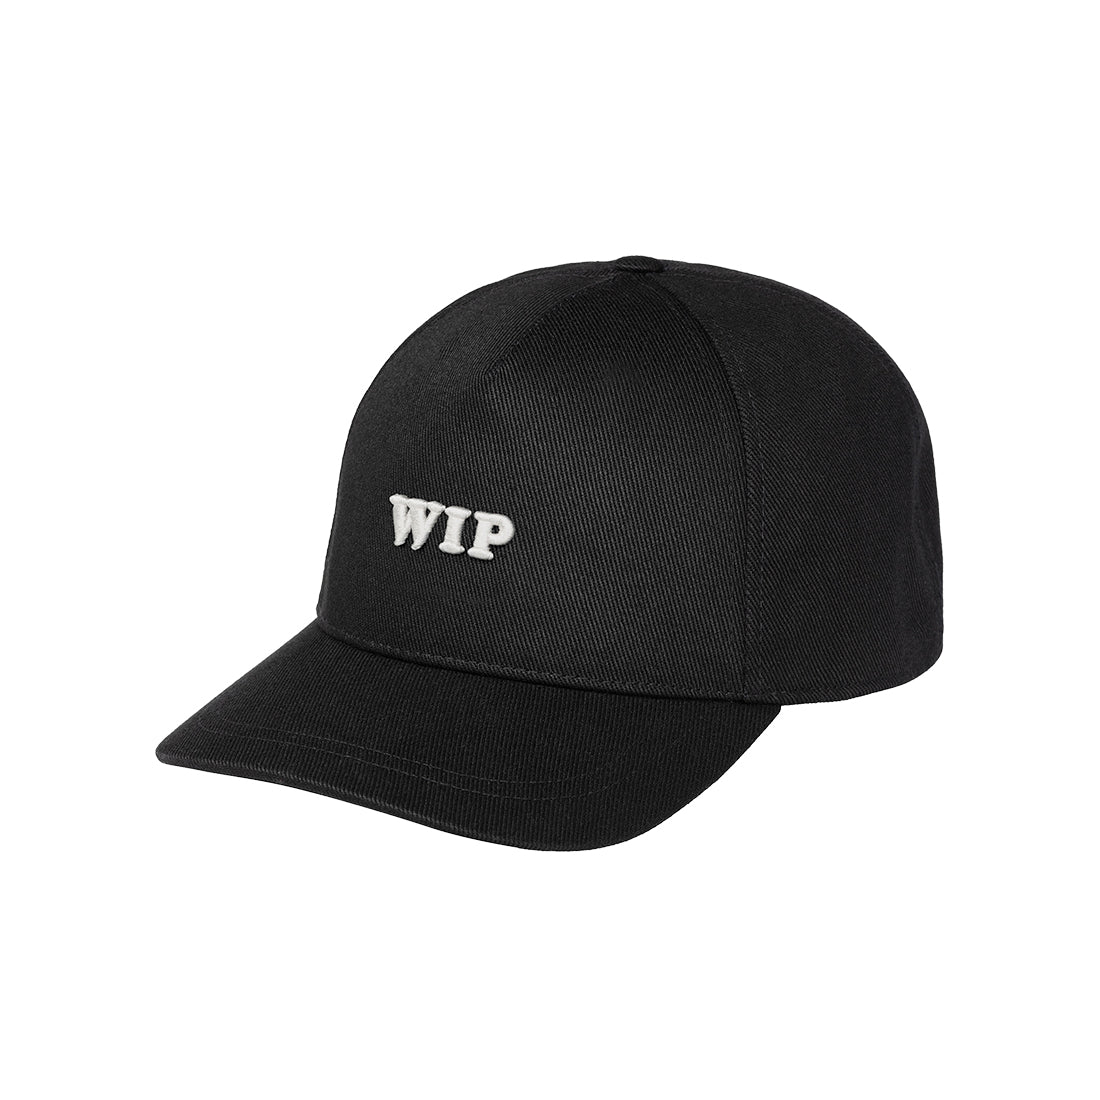 Wip Cap - Black/Wax